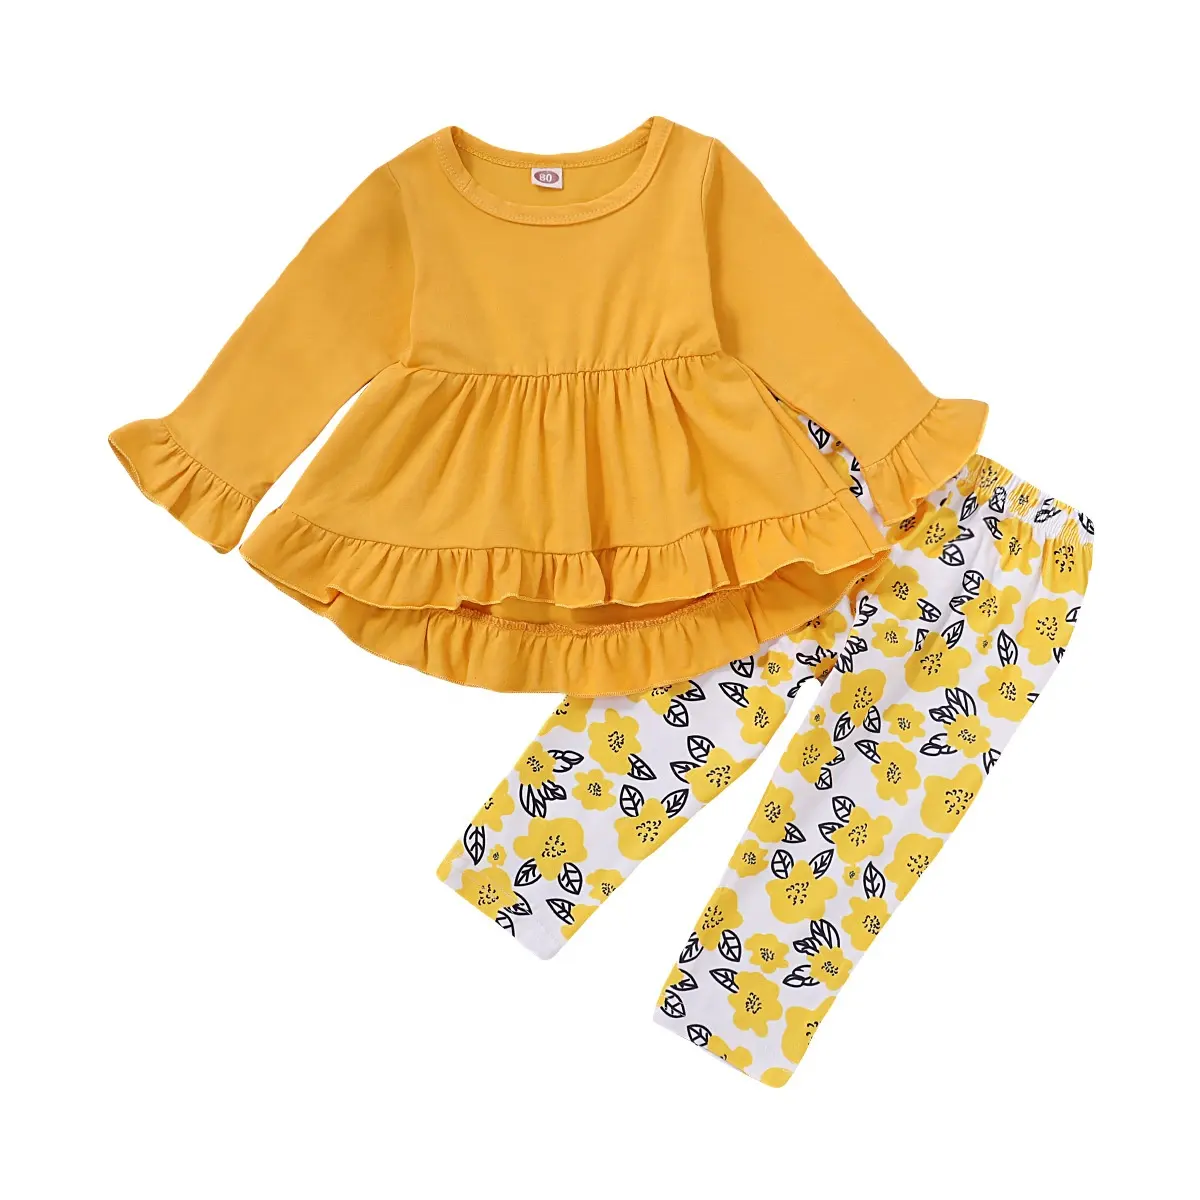 Neugeborene Baby Mädchen Kleidung Set Langarm Tops Print Hosen 2Pcs Outfits Säuglings bekleidung Anzug